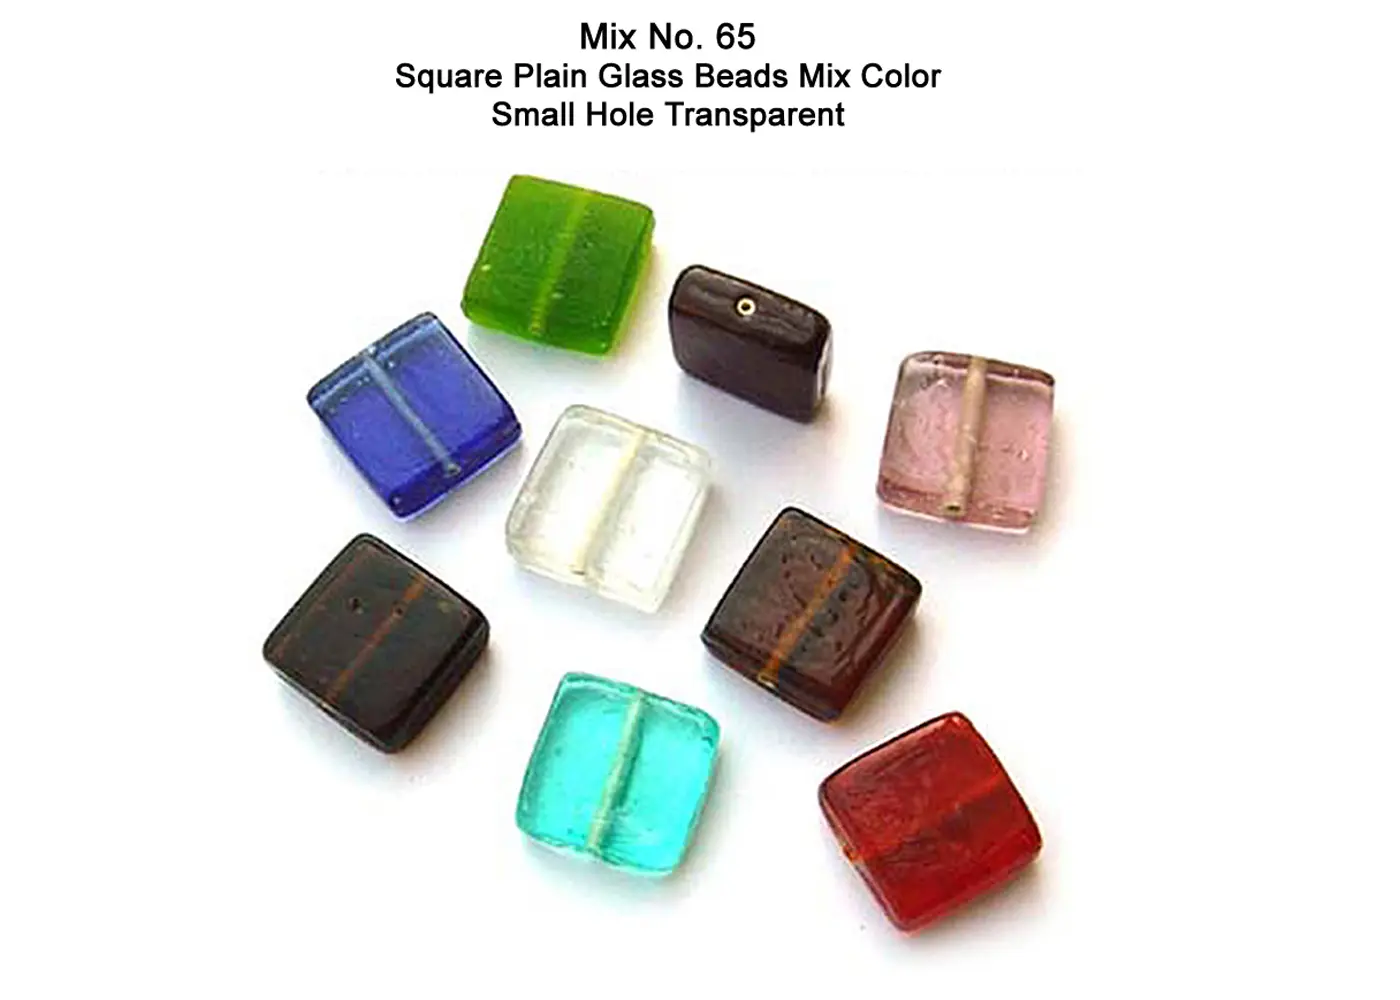 Square Plain glass bead mix color small hole transparent